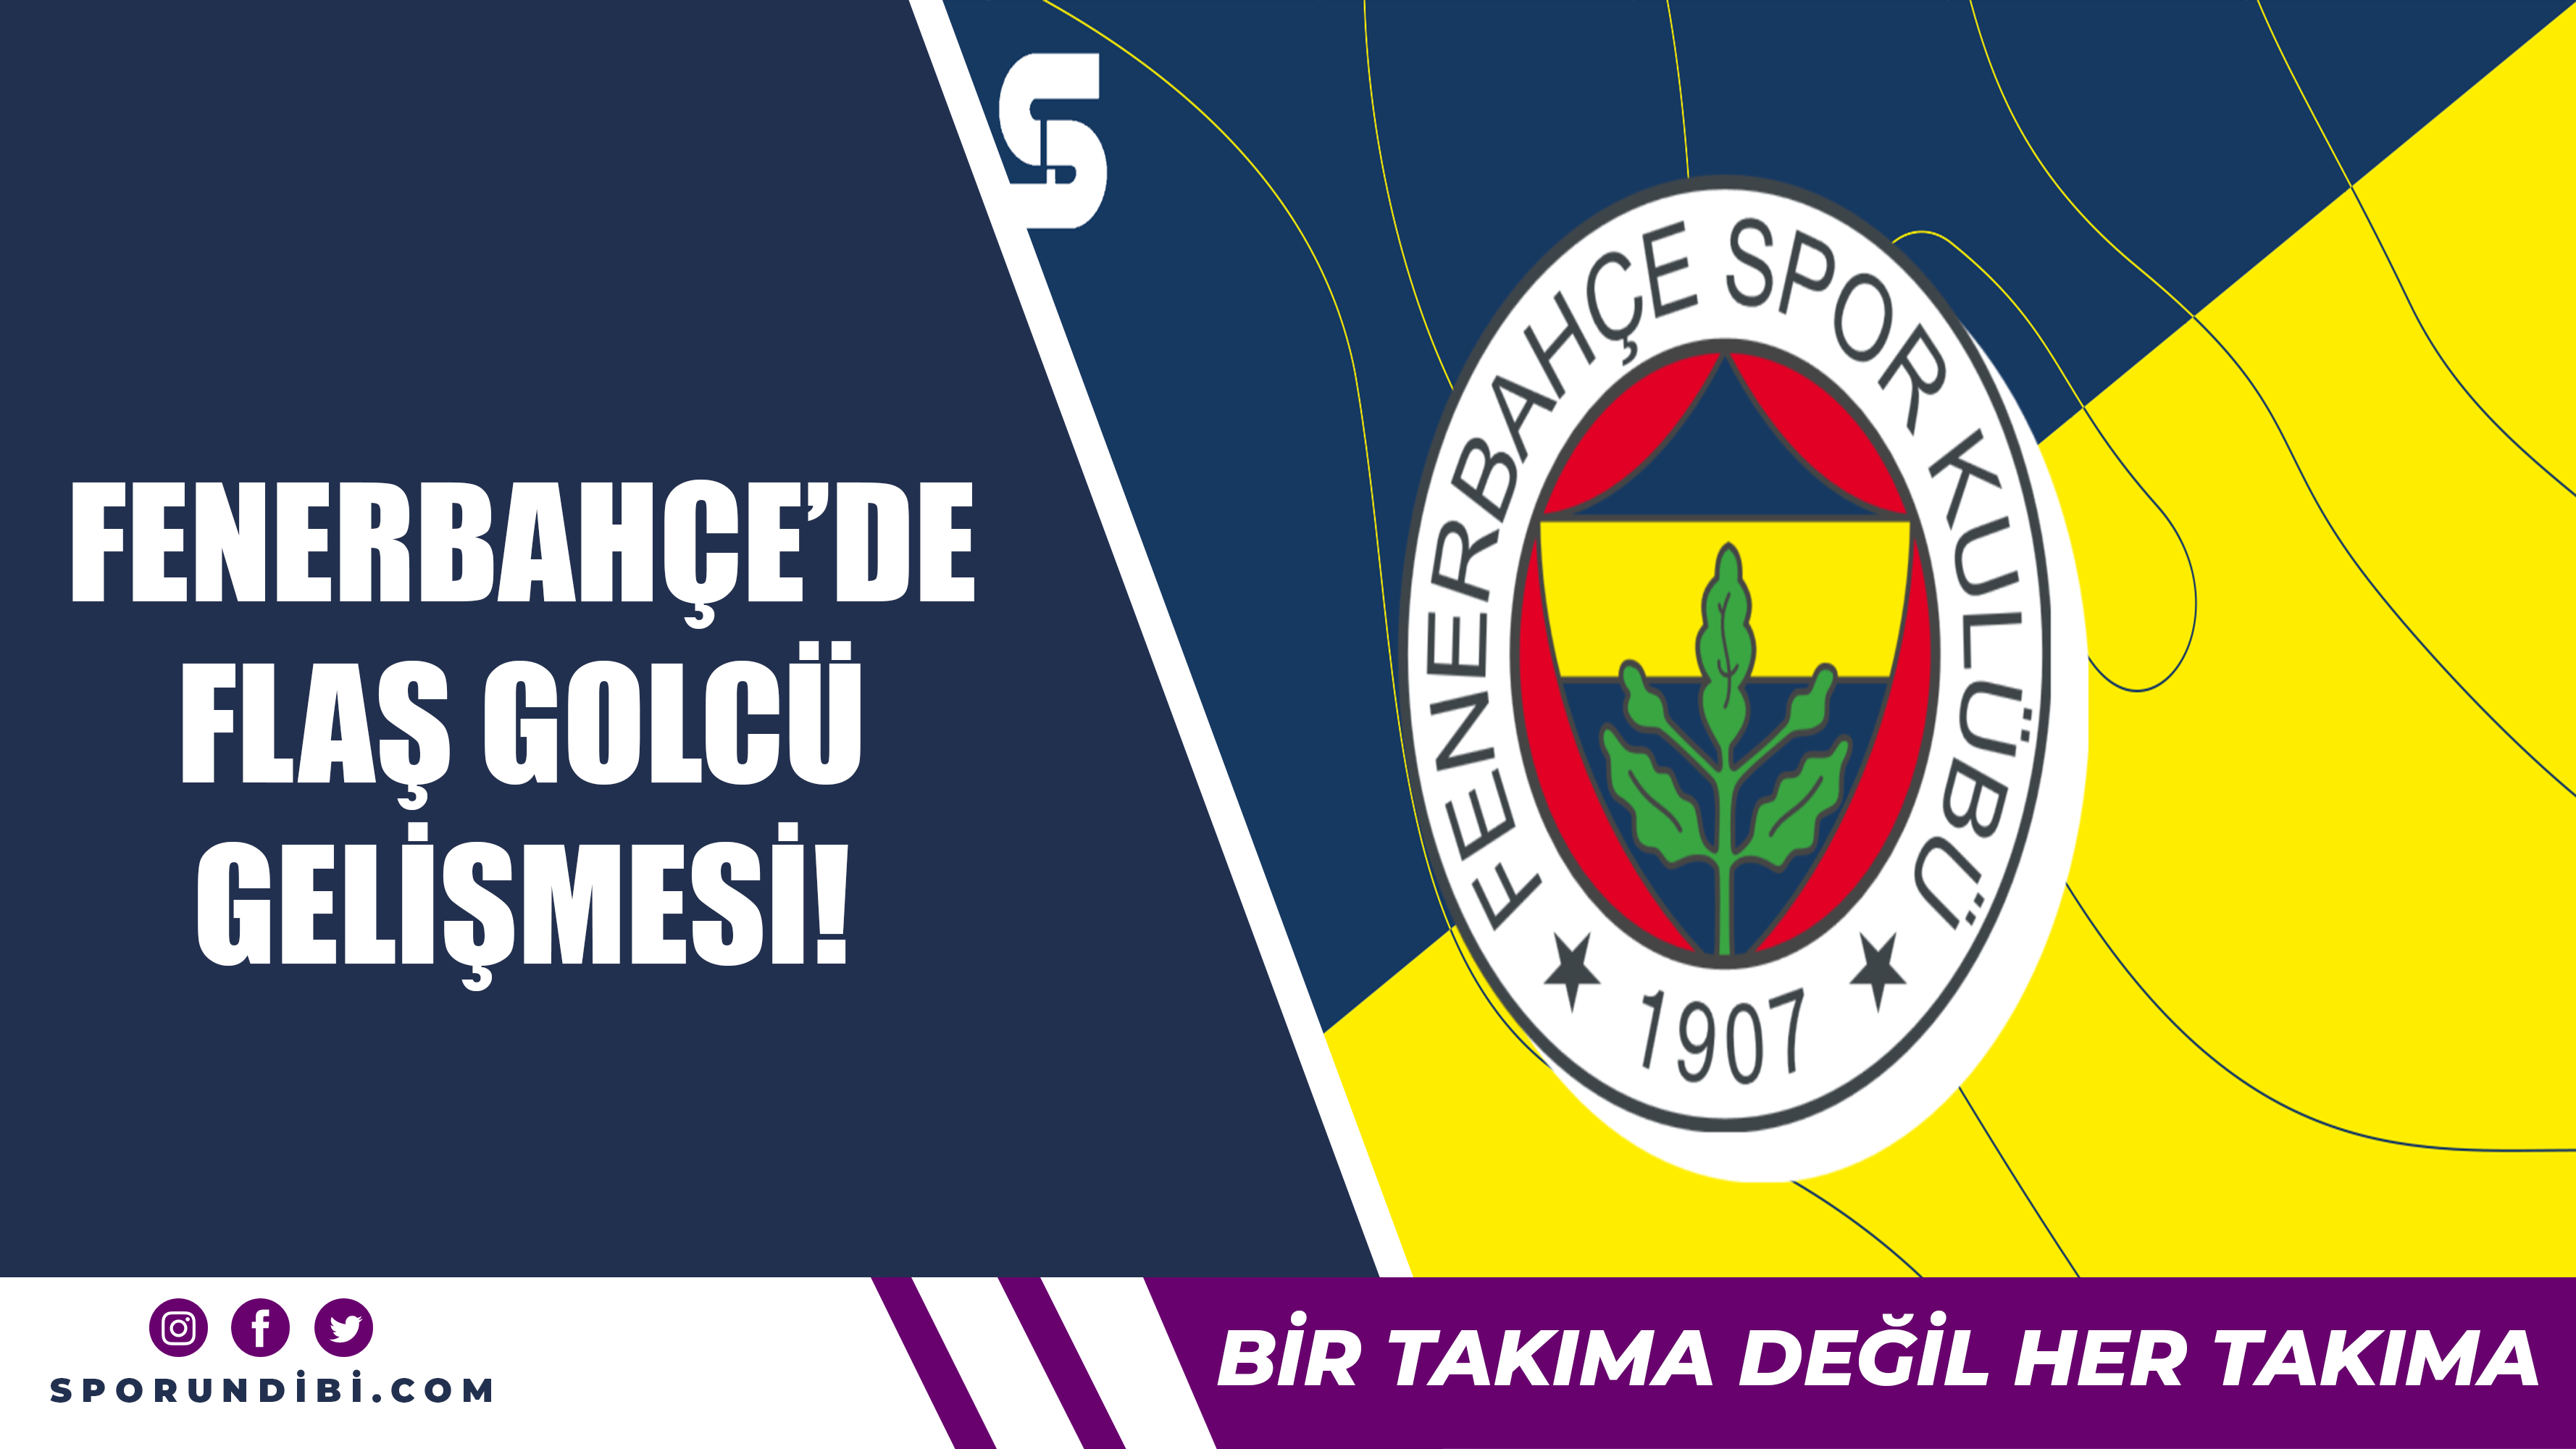 Fenerbahçe'de flaş golcü gelişmesi!